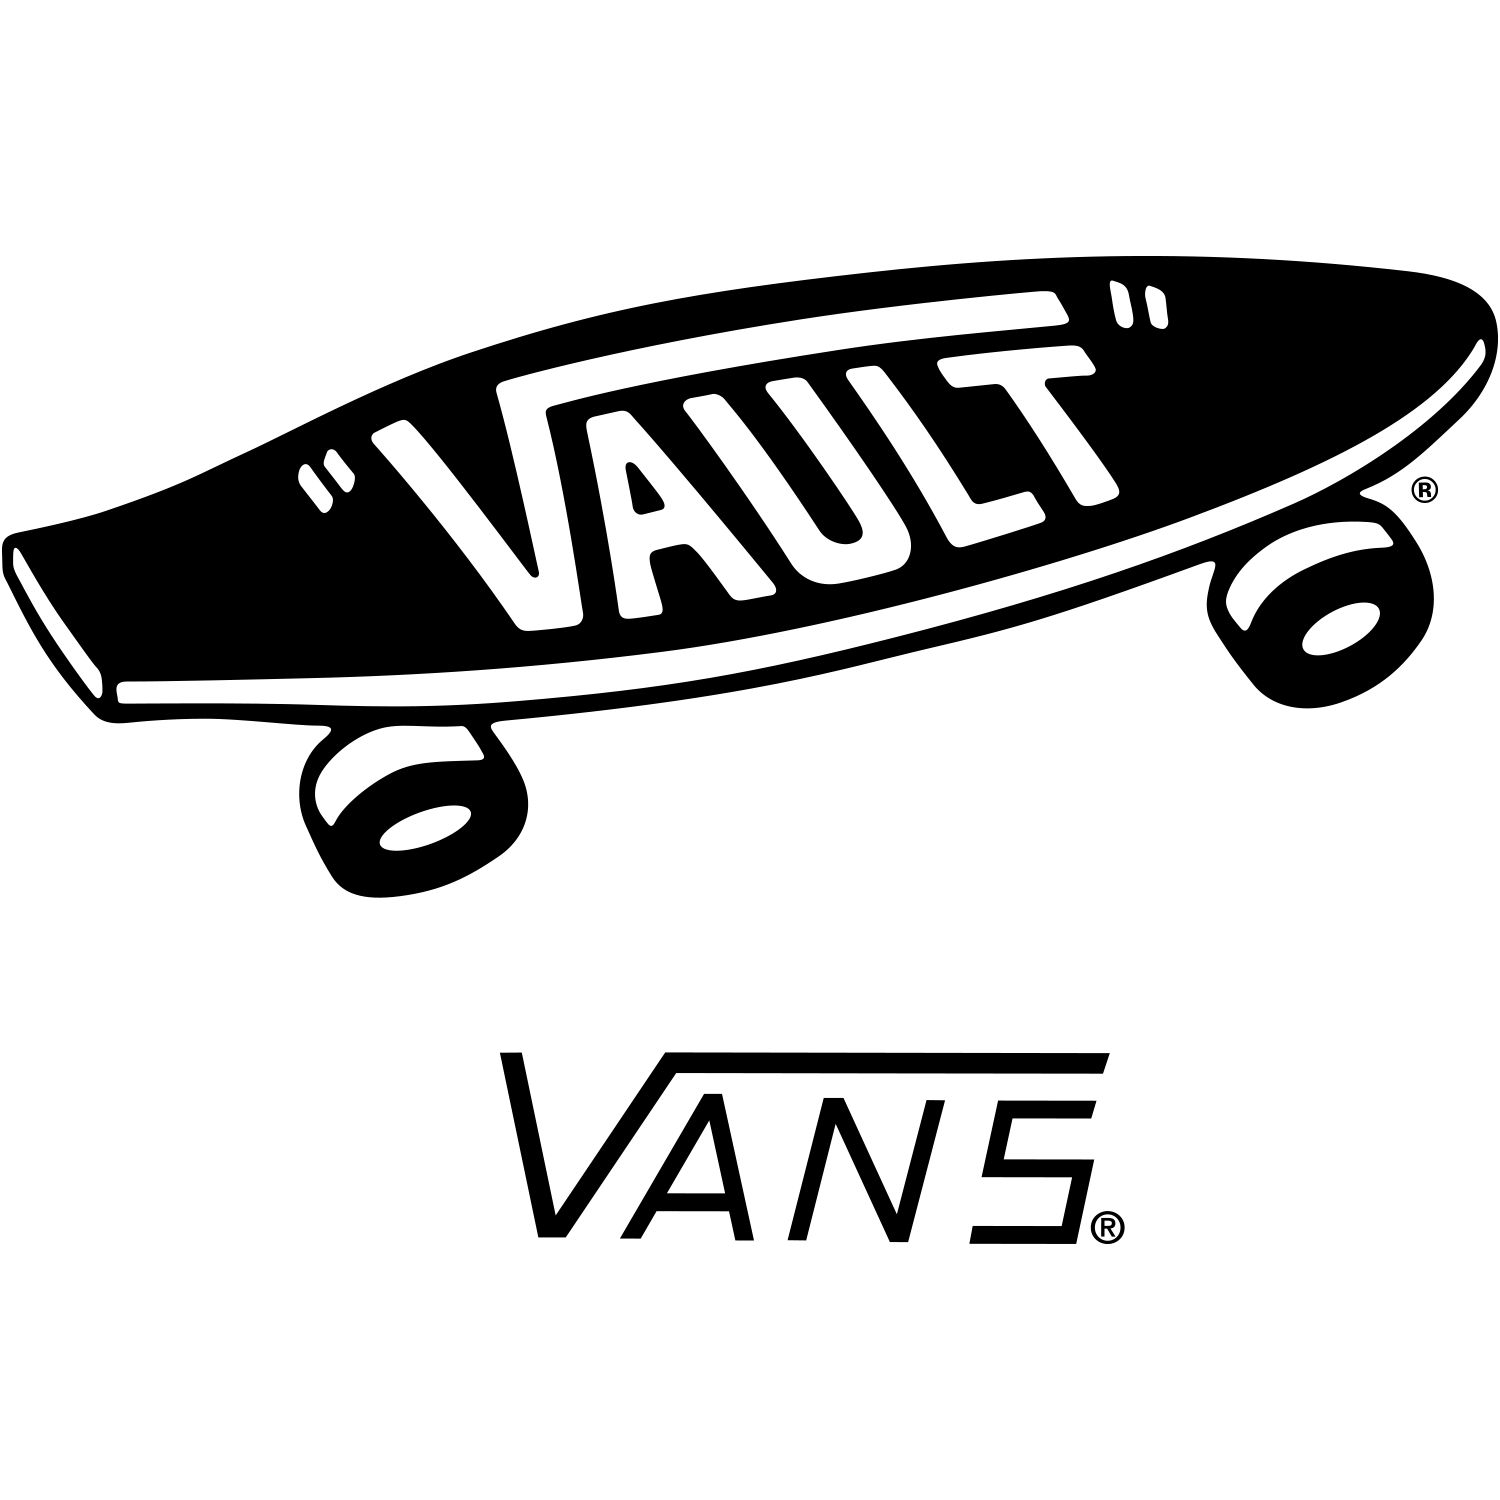 Vans Skateboard Logo - VANS VAULT